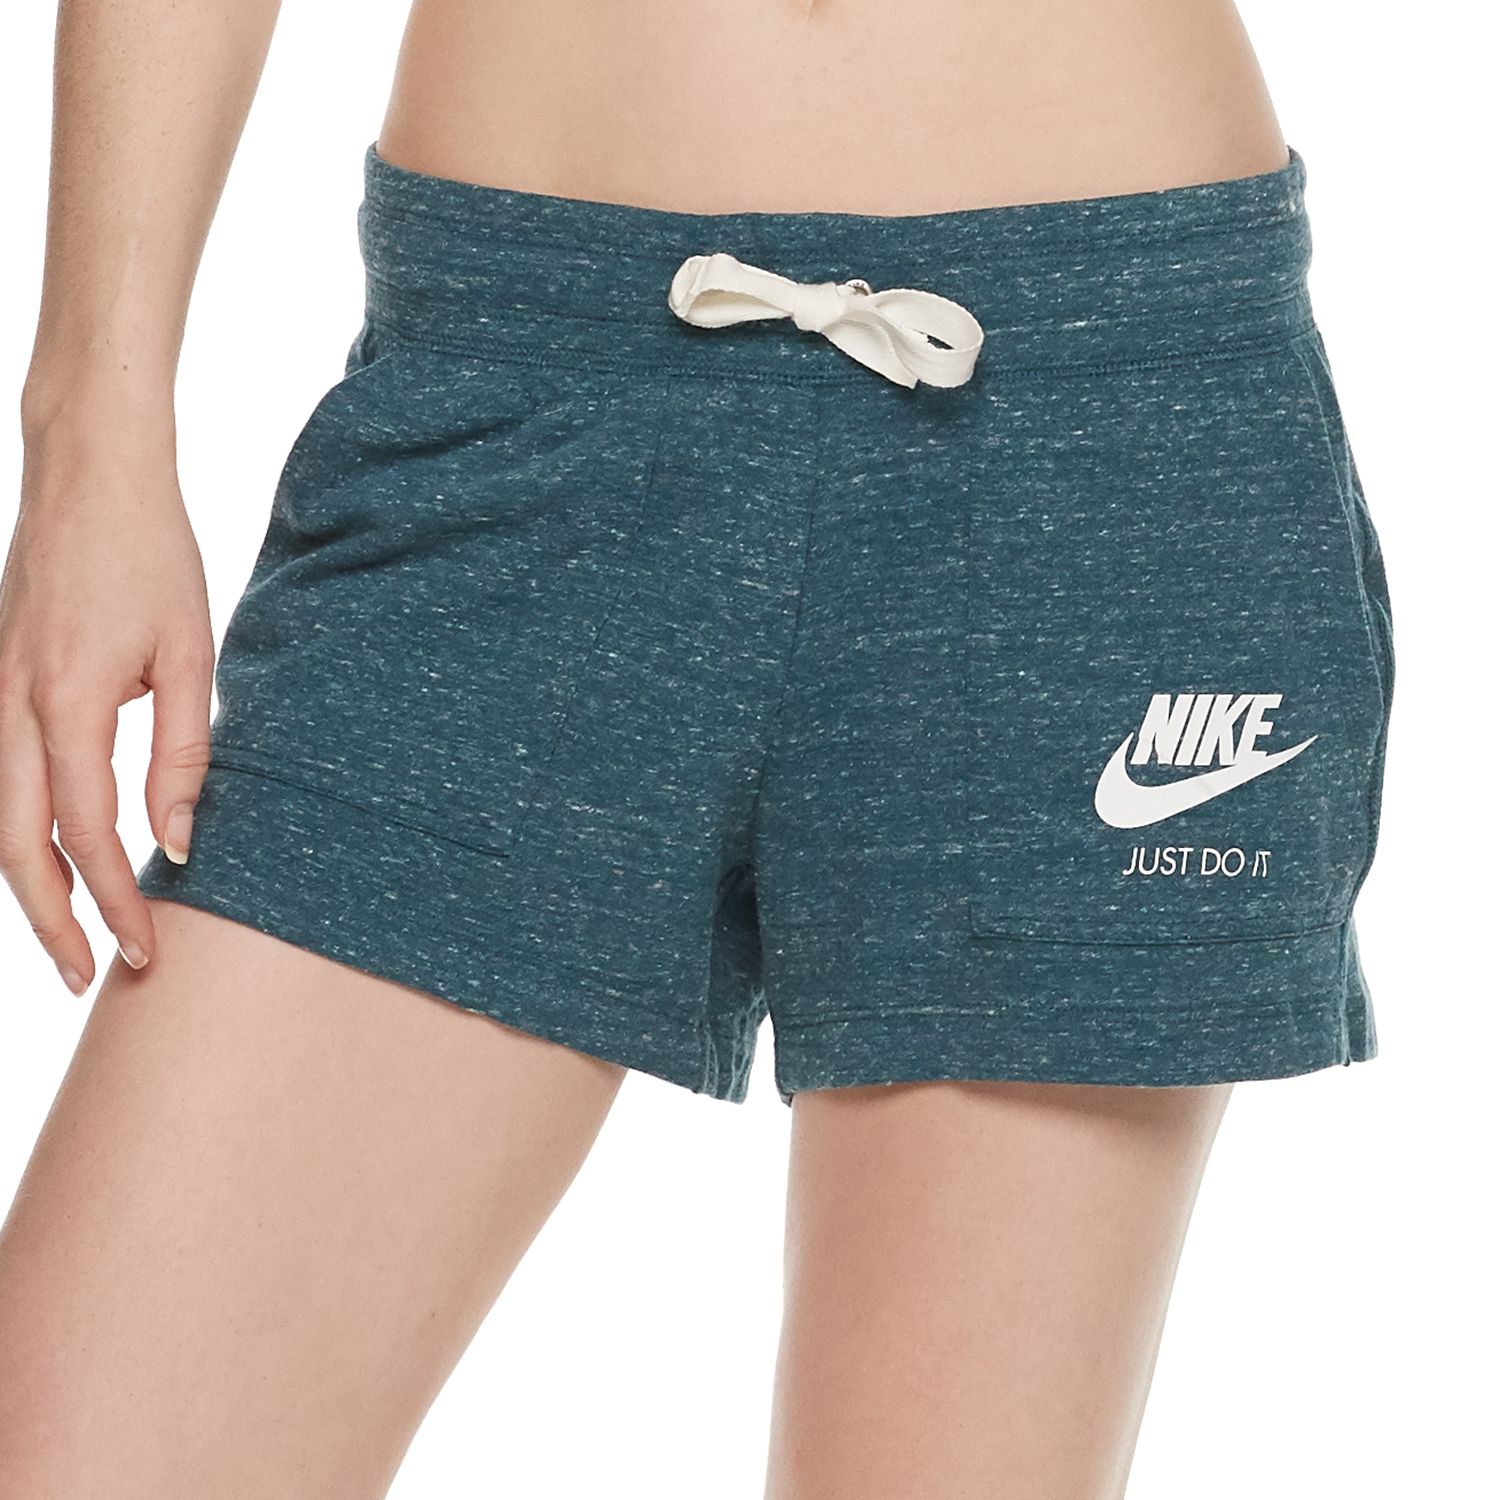 nike women's drawstring shorts